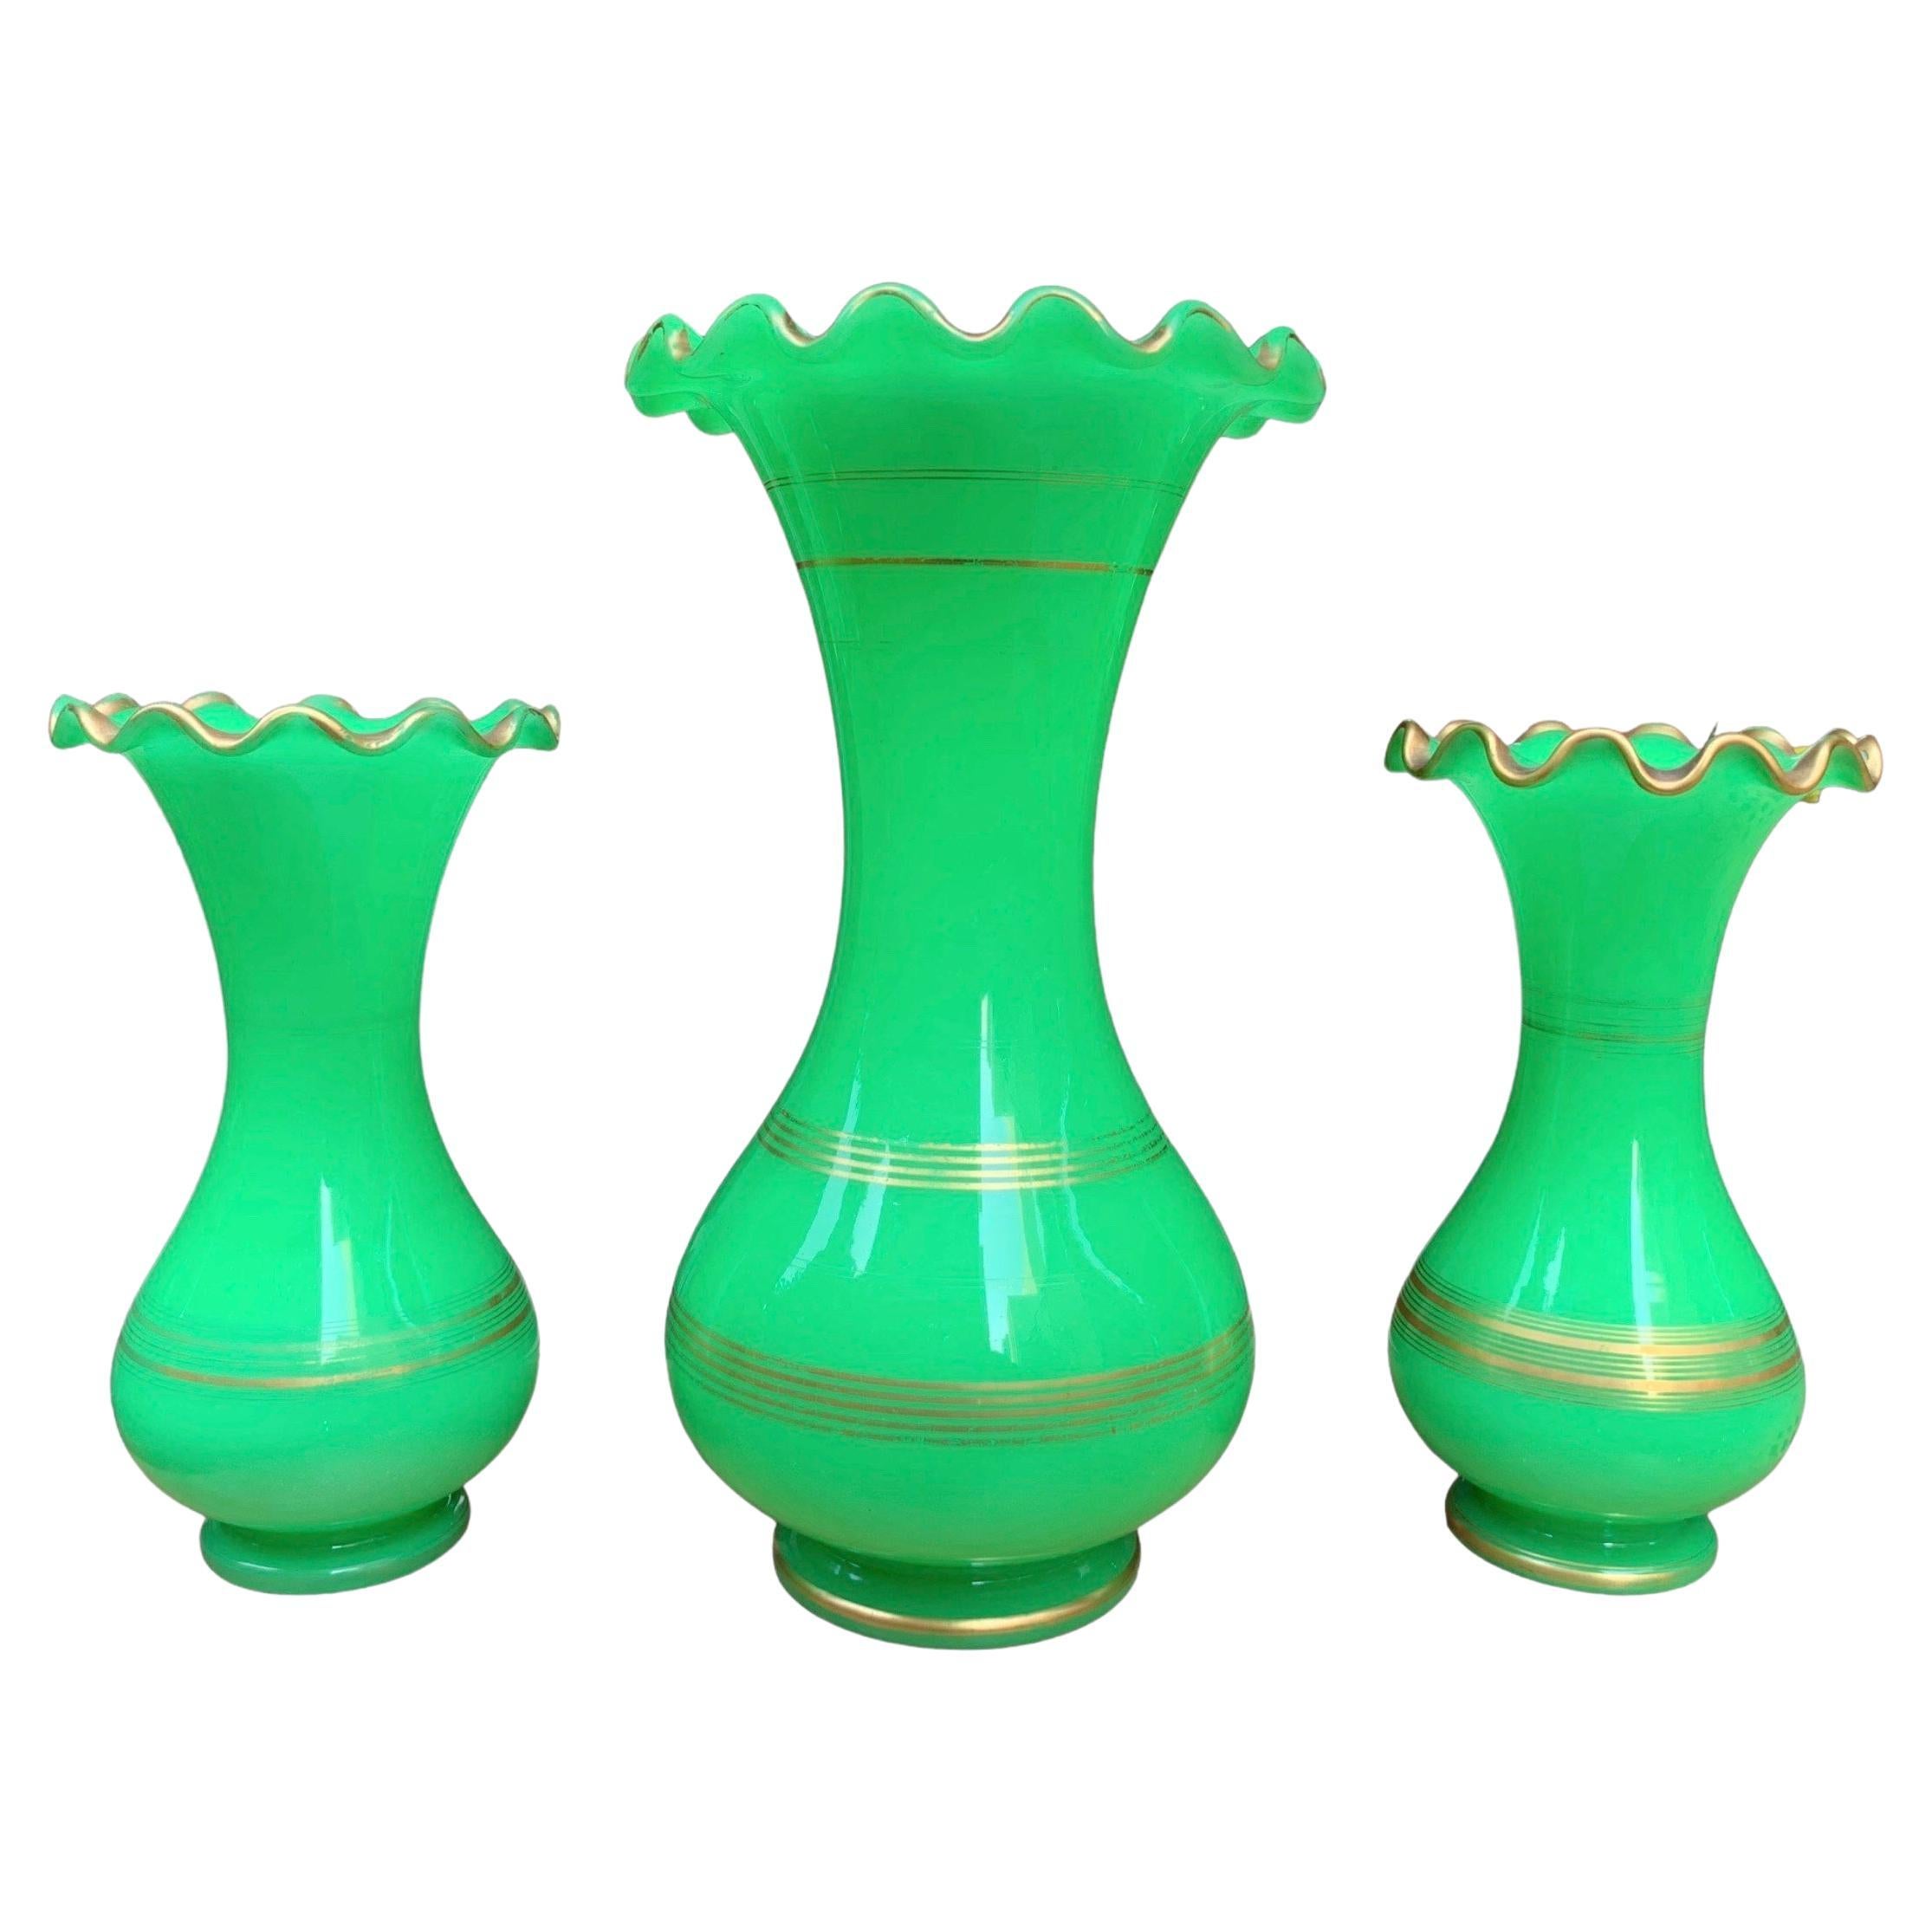 Antique 3 French Vases Jn Green Uranium Opaline Glass, 19th Century